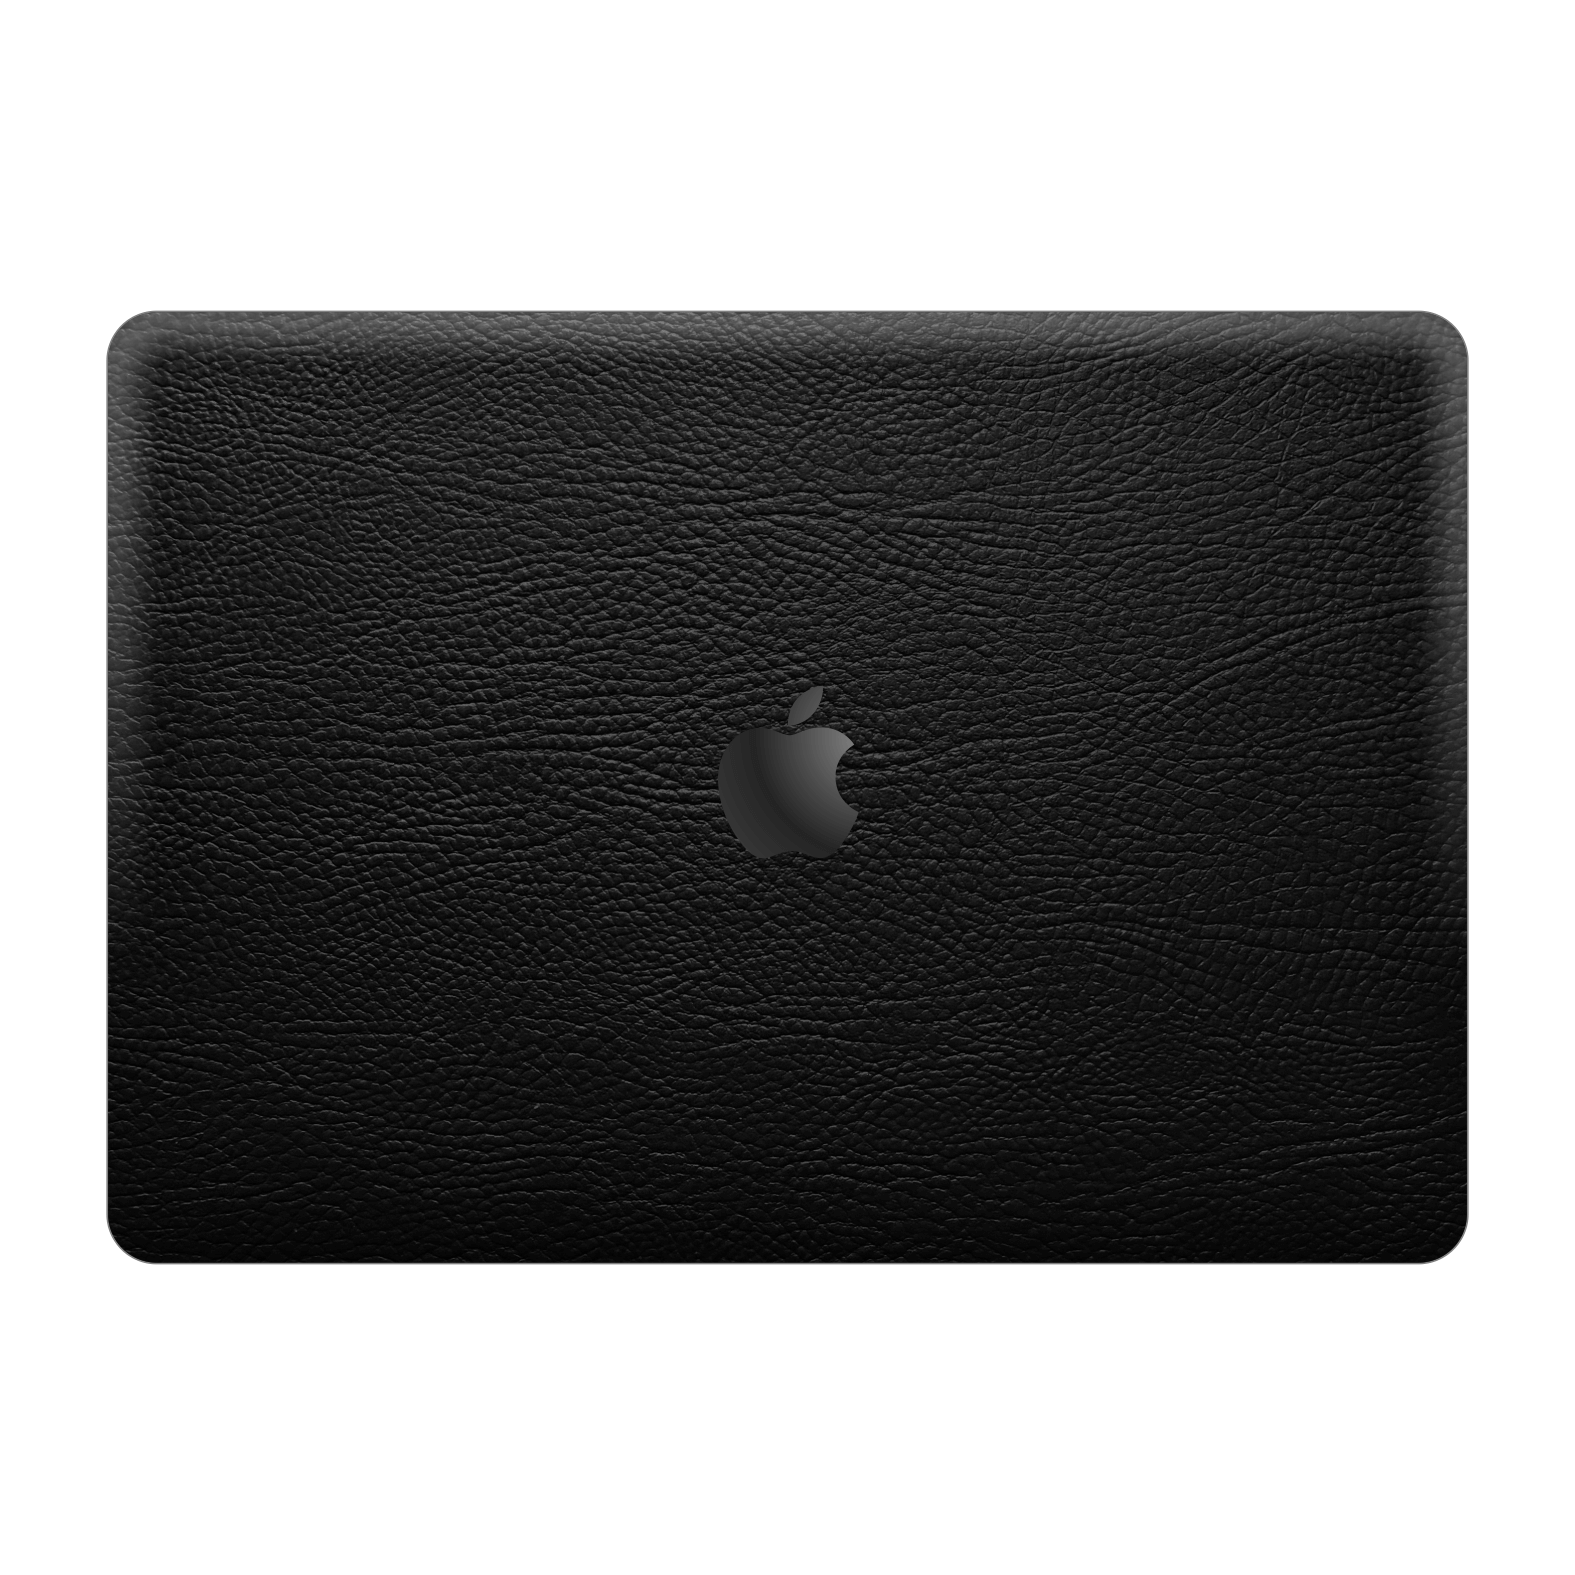 MacBook Pro 16" (2019) Luxuria BLACK LEATHER Riders Skin Wrap Sticker Decal Cover Protector by EasySkinz | EasySkinz.com